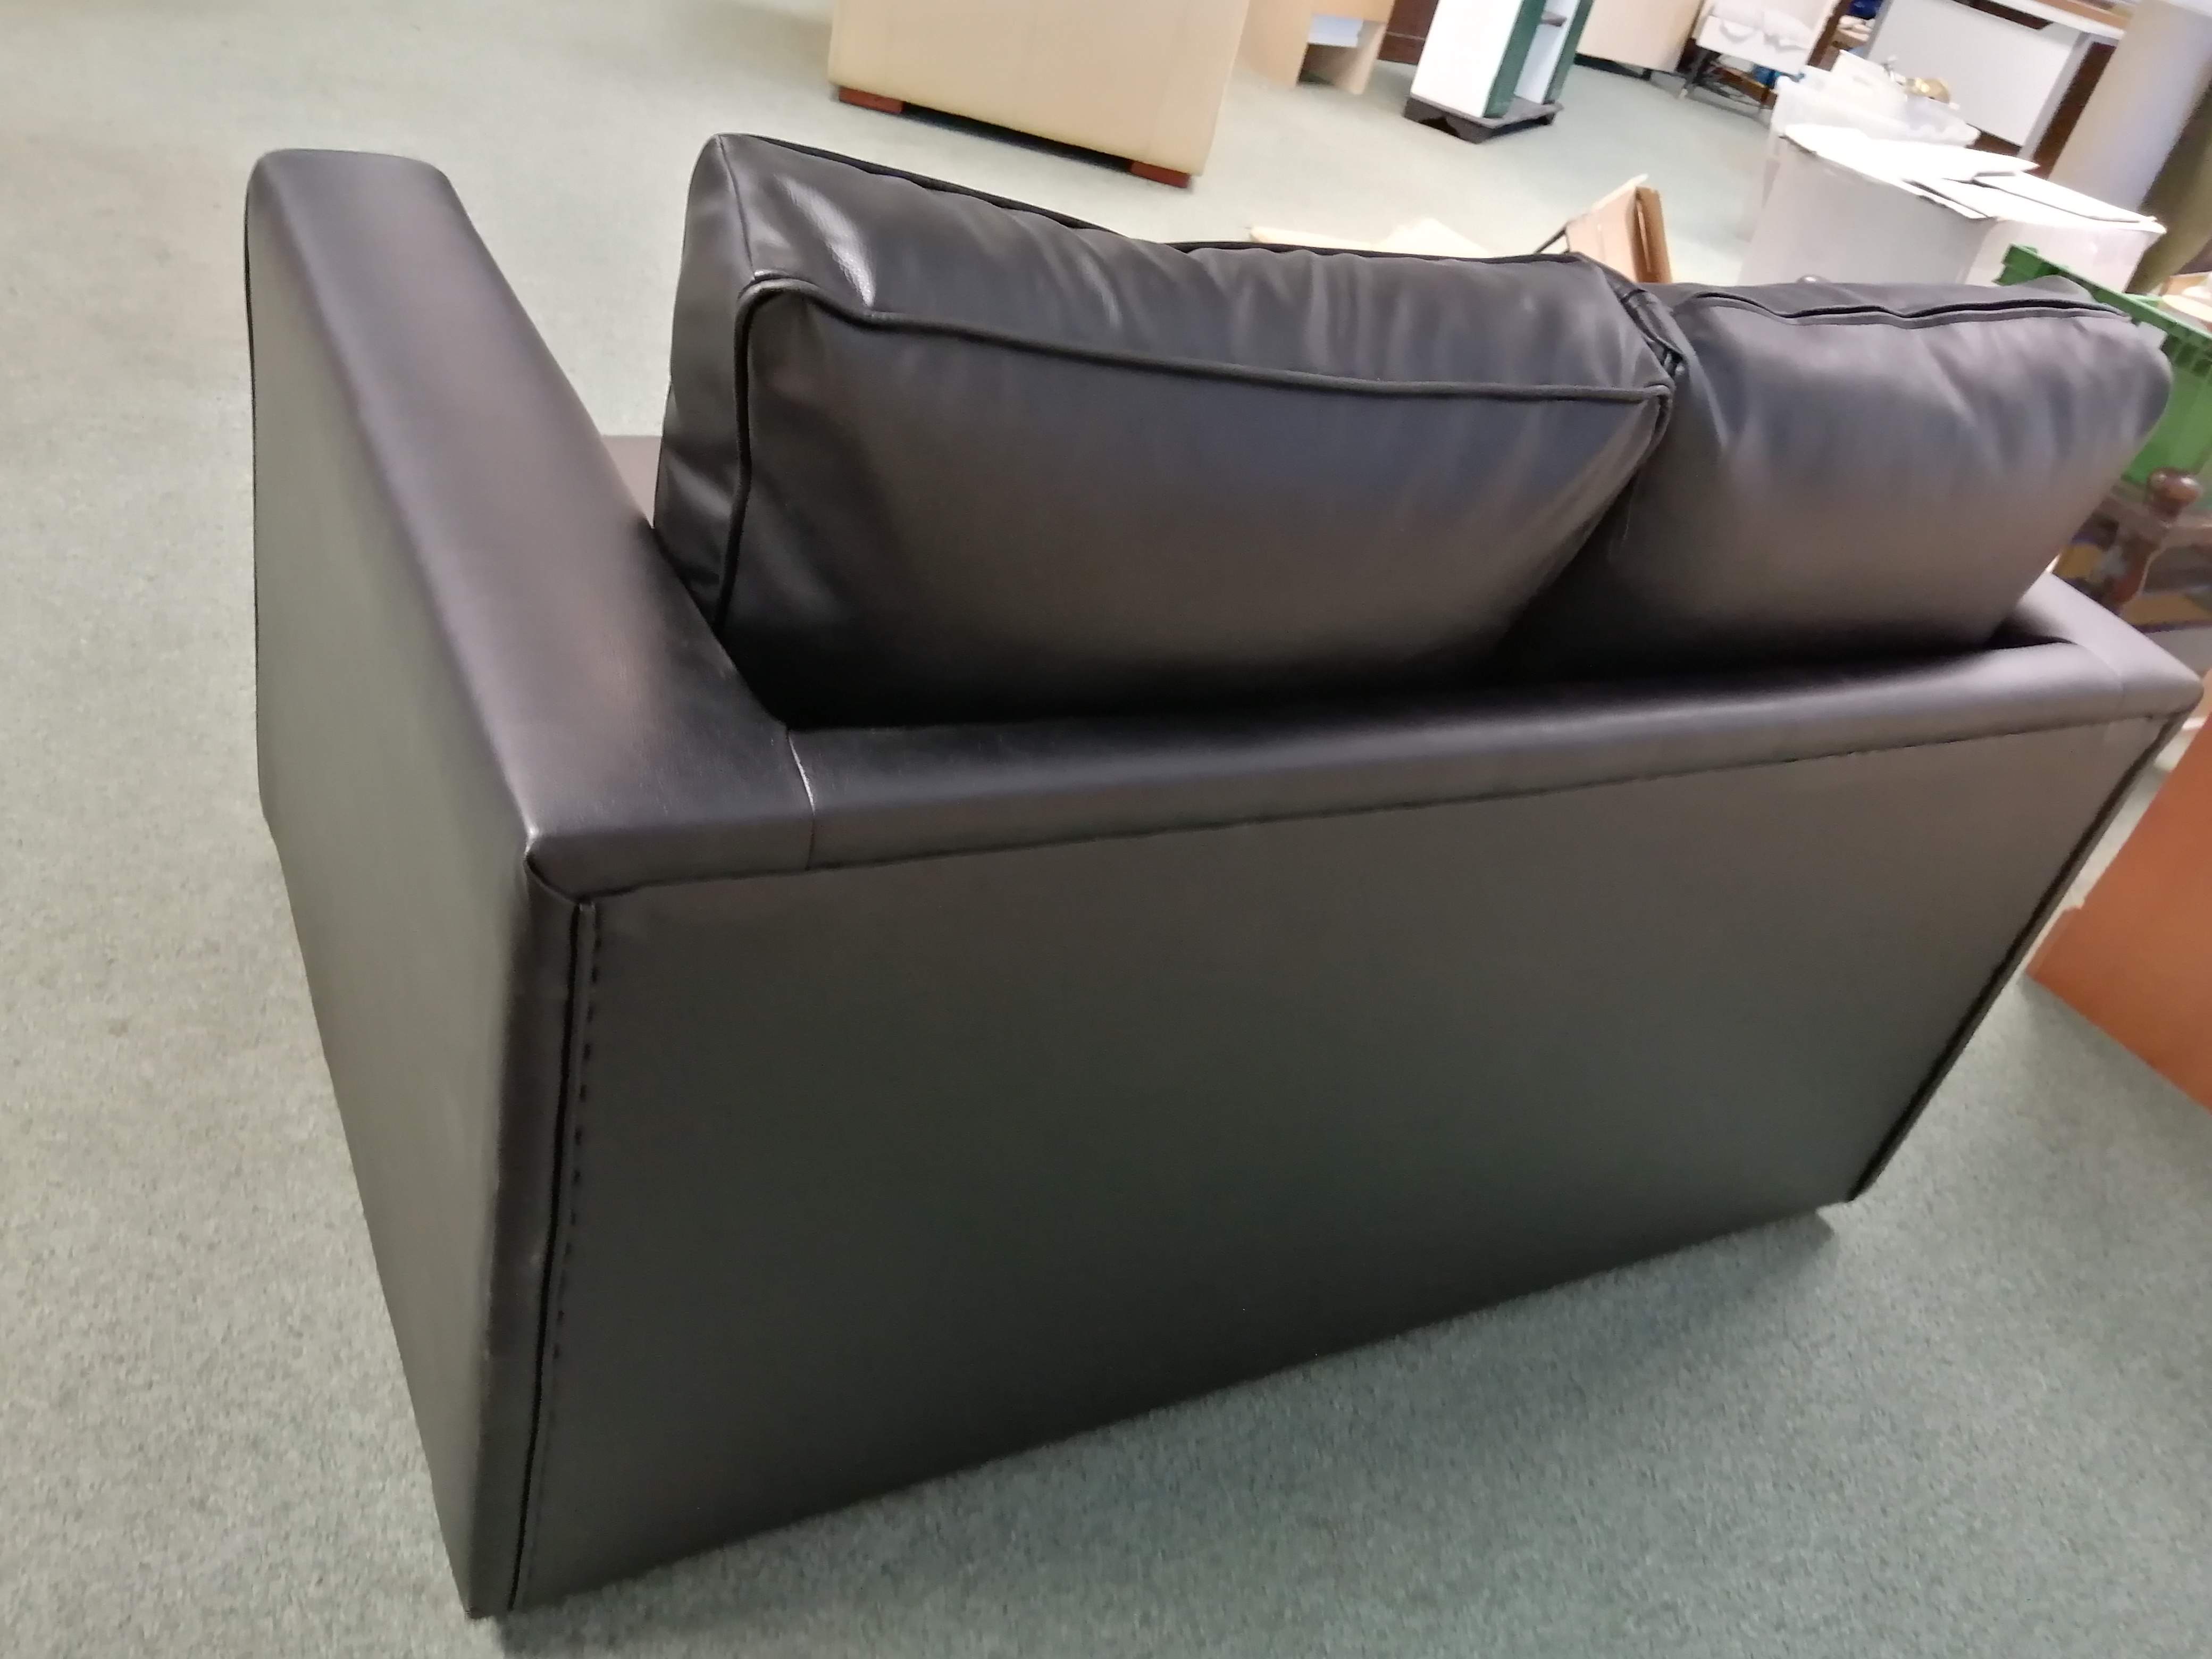 Brand New Black 2 seat Sofa